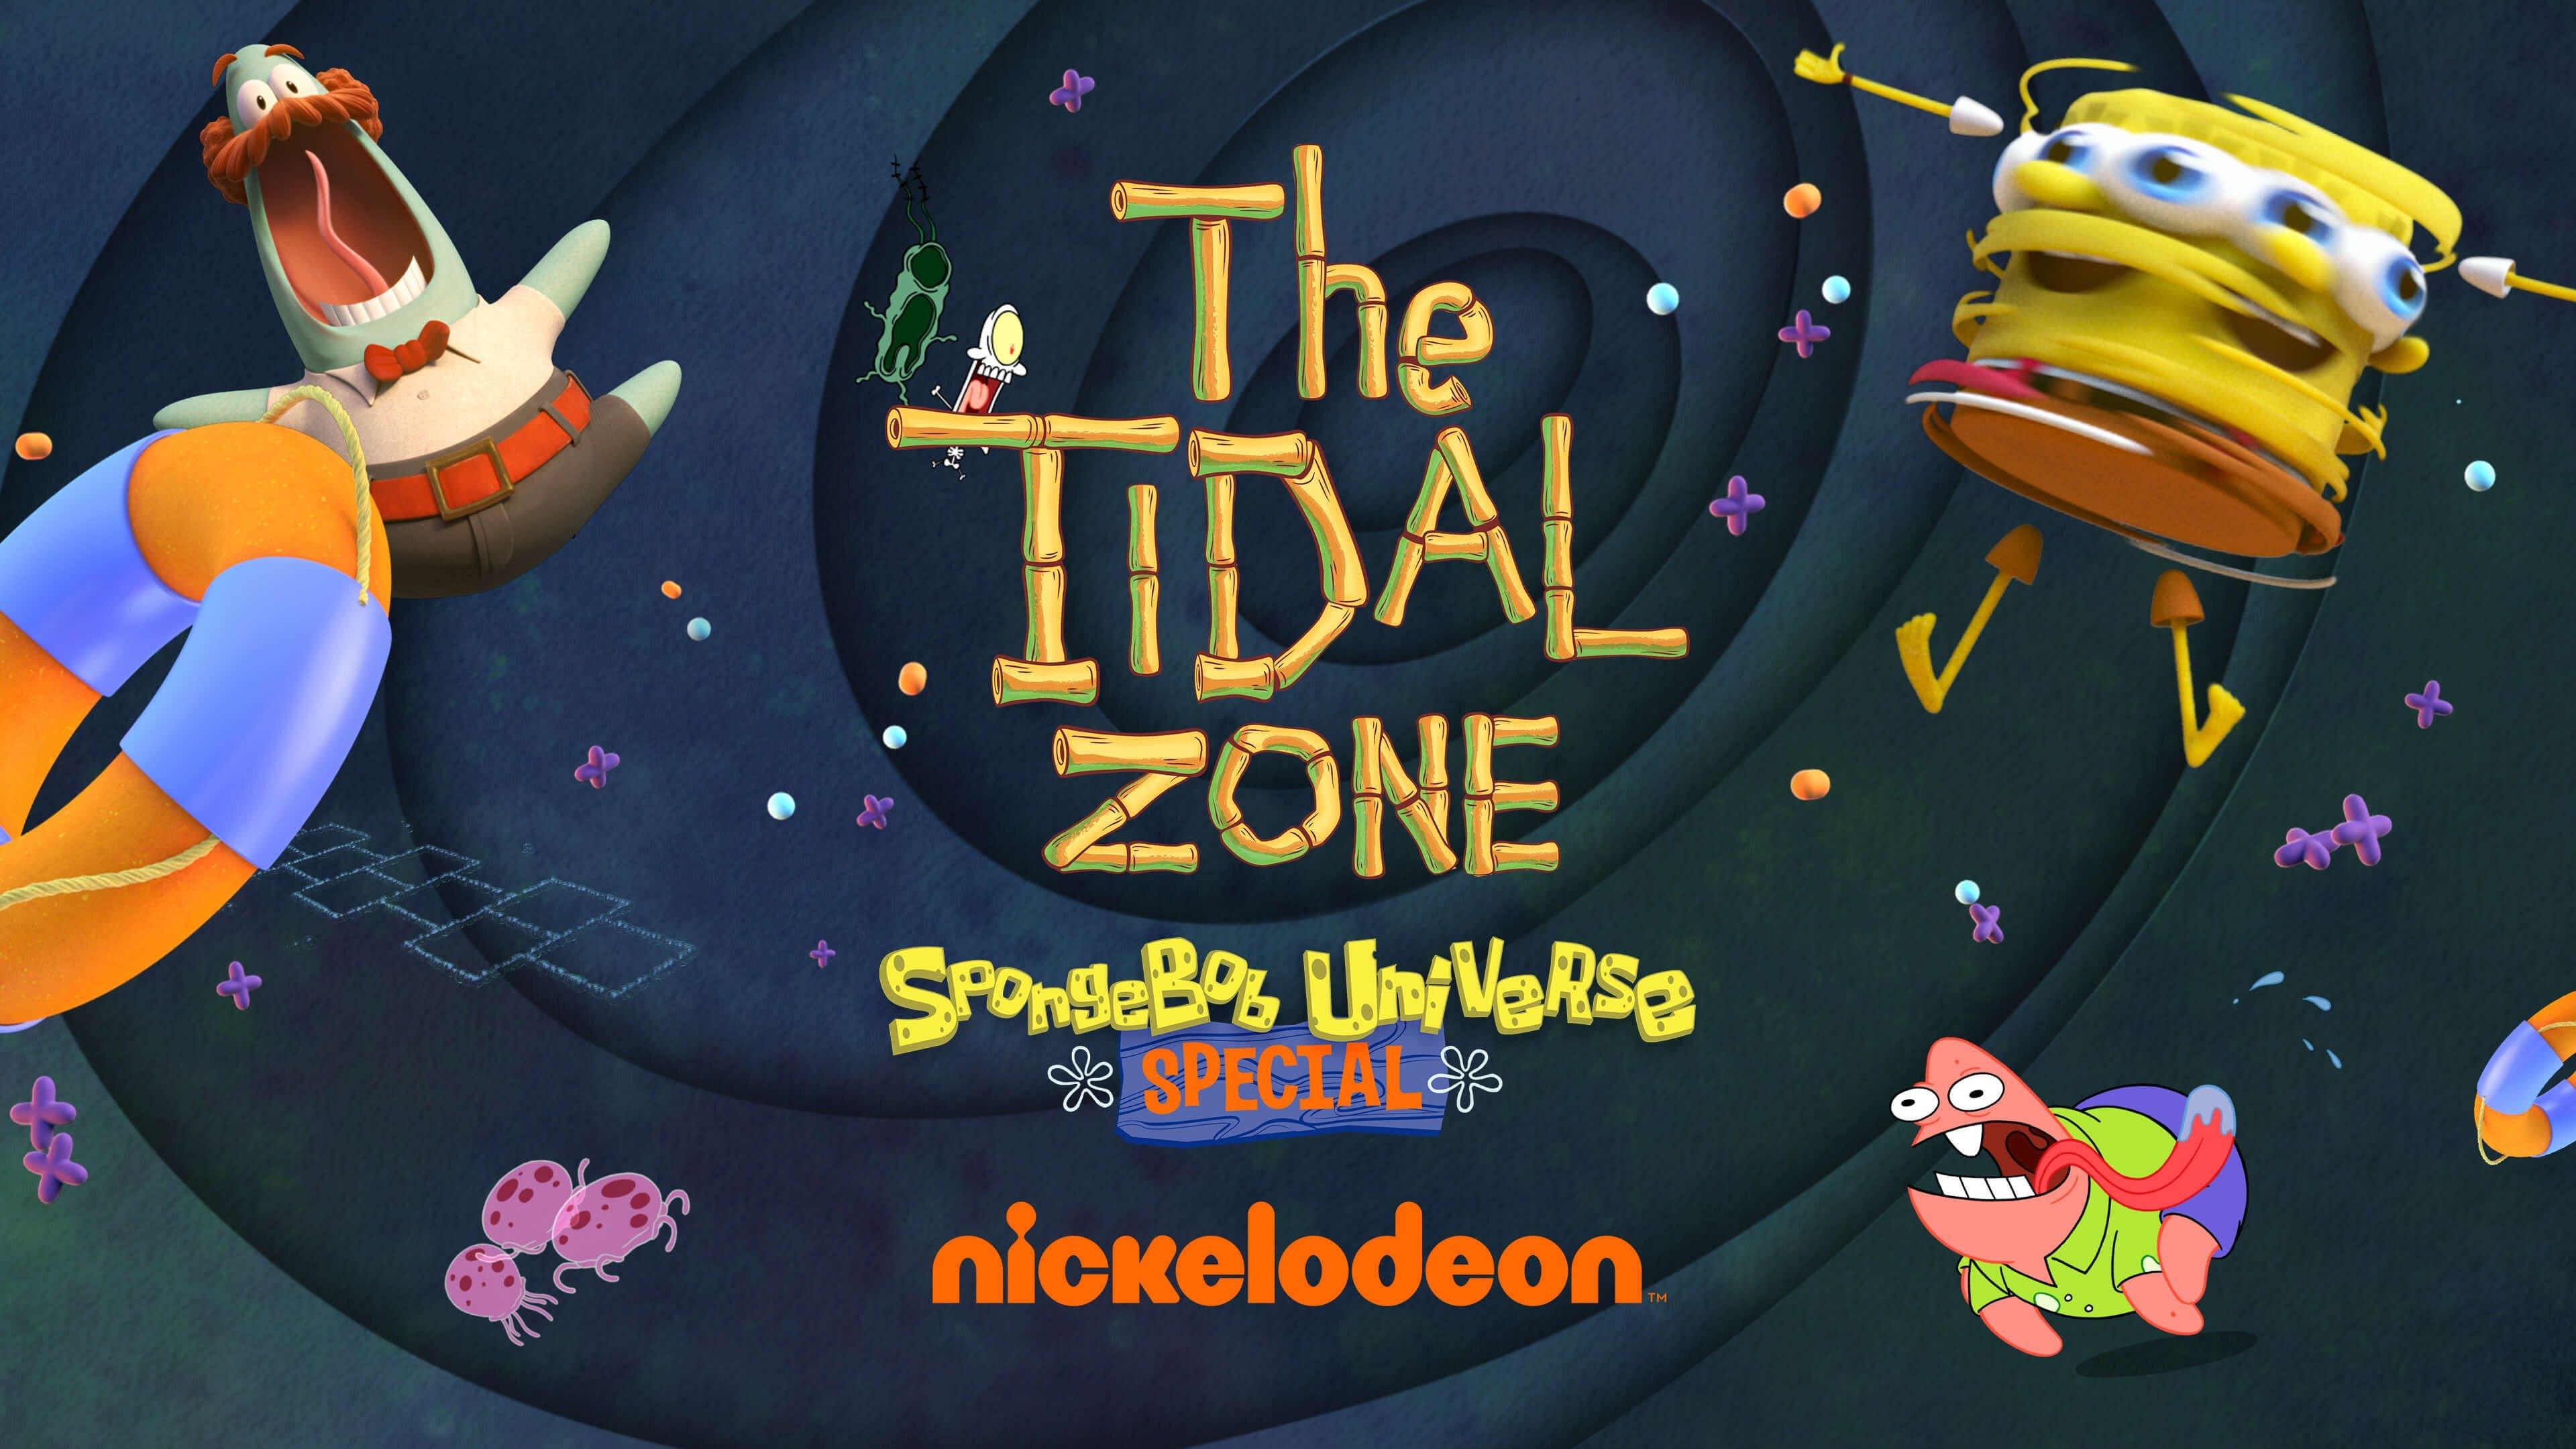 Watch SpongeBob SquarePants Presents the Tidal Zone Streaming Online on